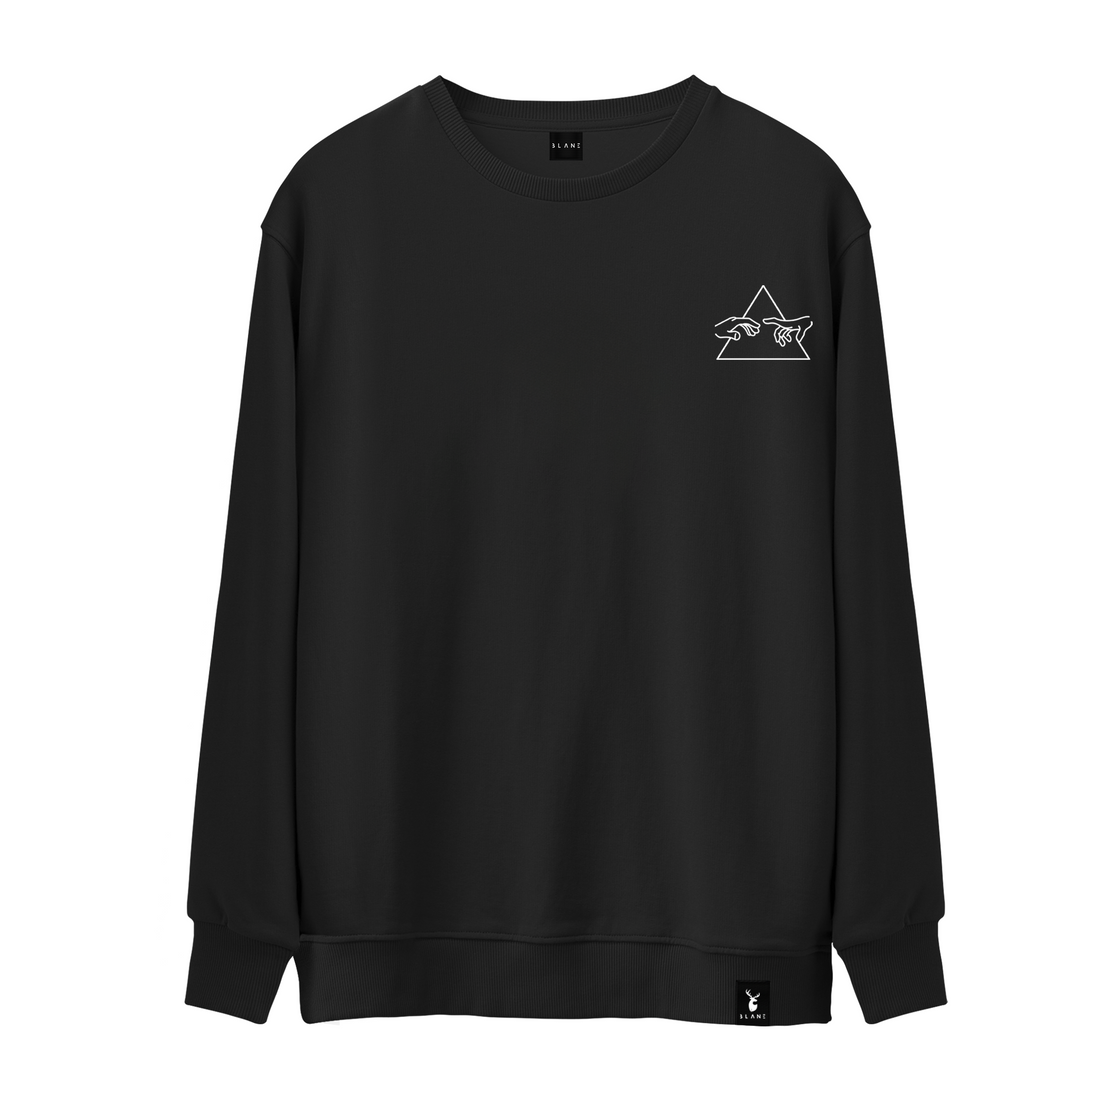 Finger Triangle - Sweatshirt